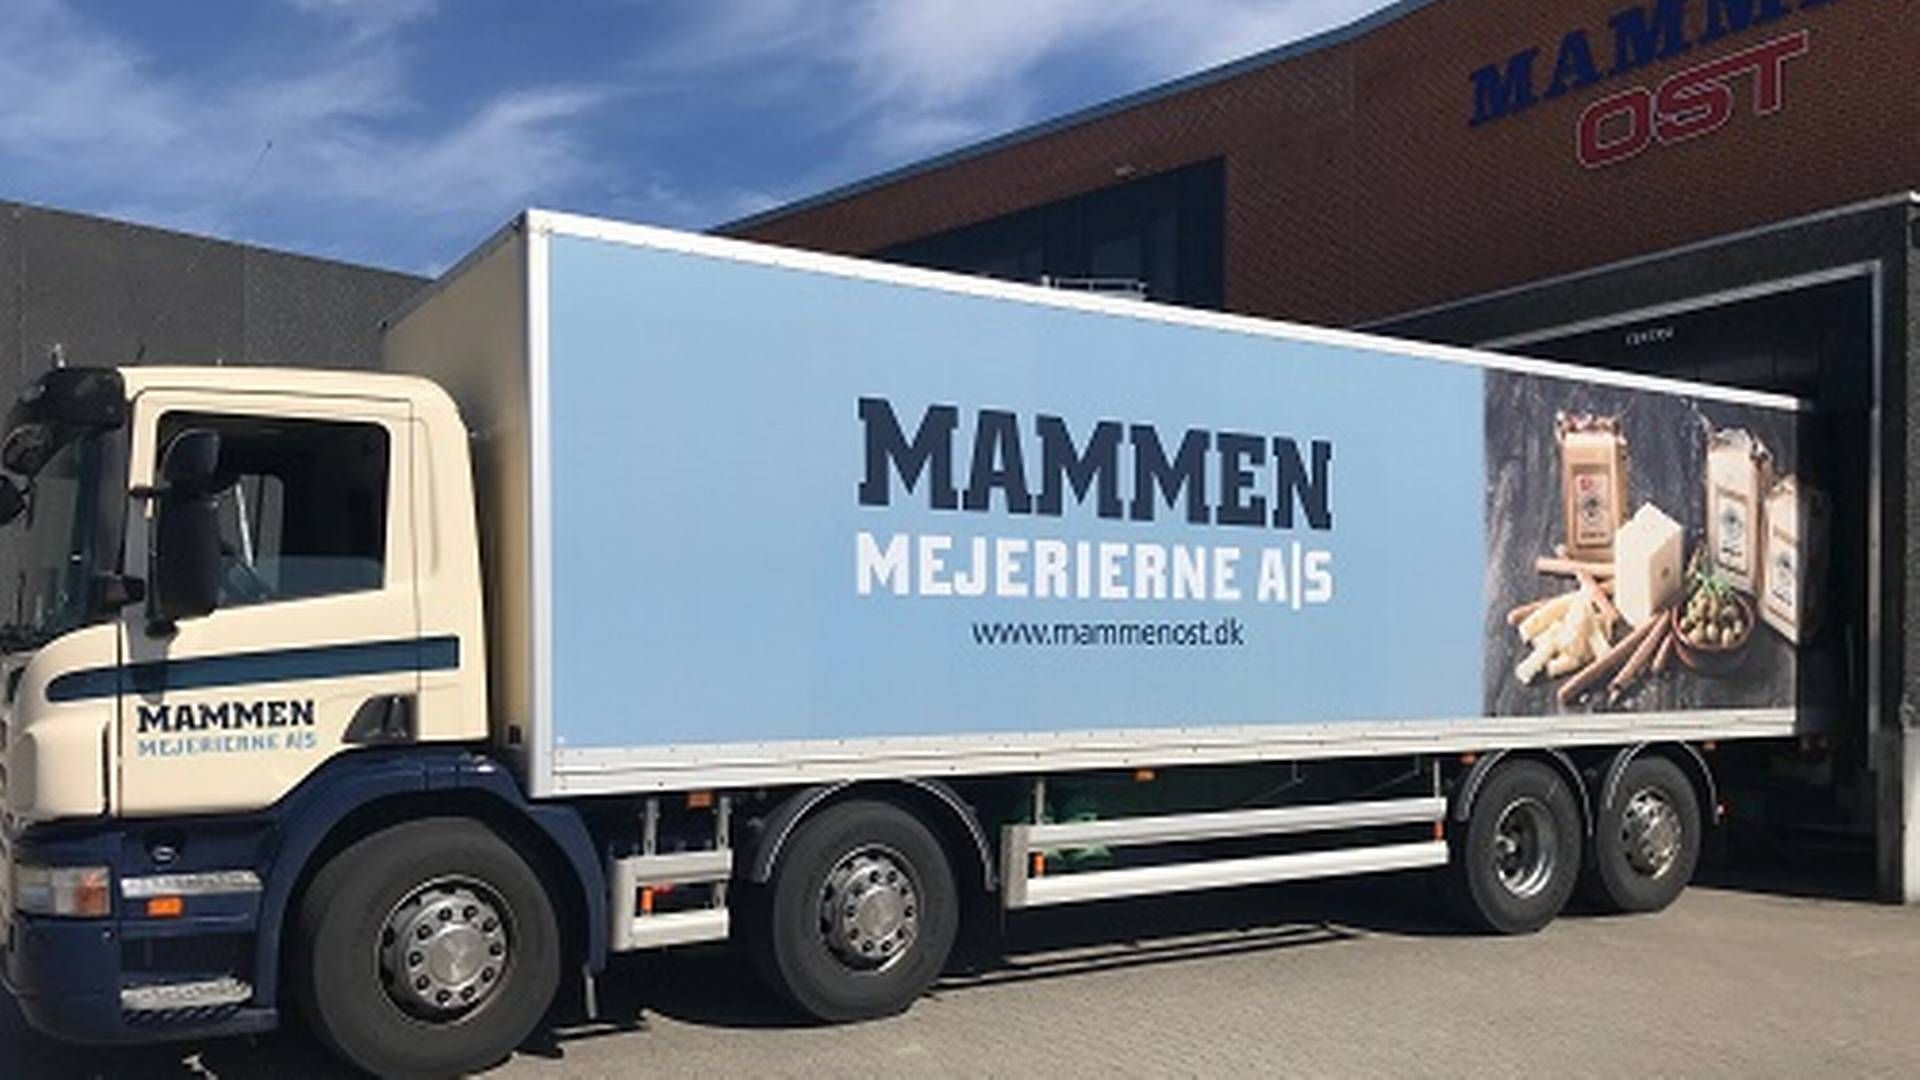 Foto: Mammen Mejerierne PR